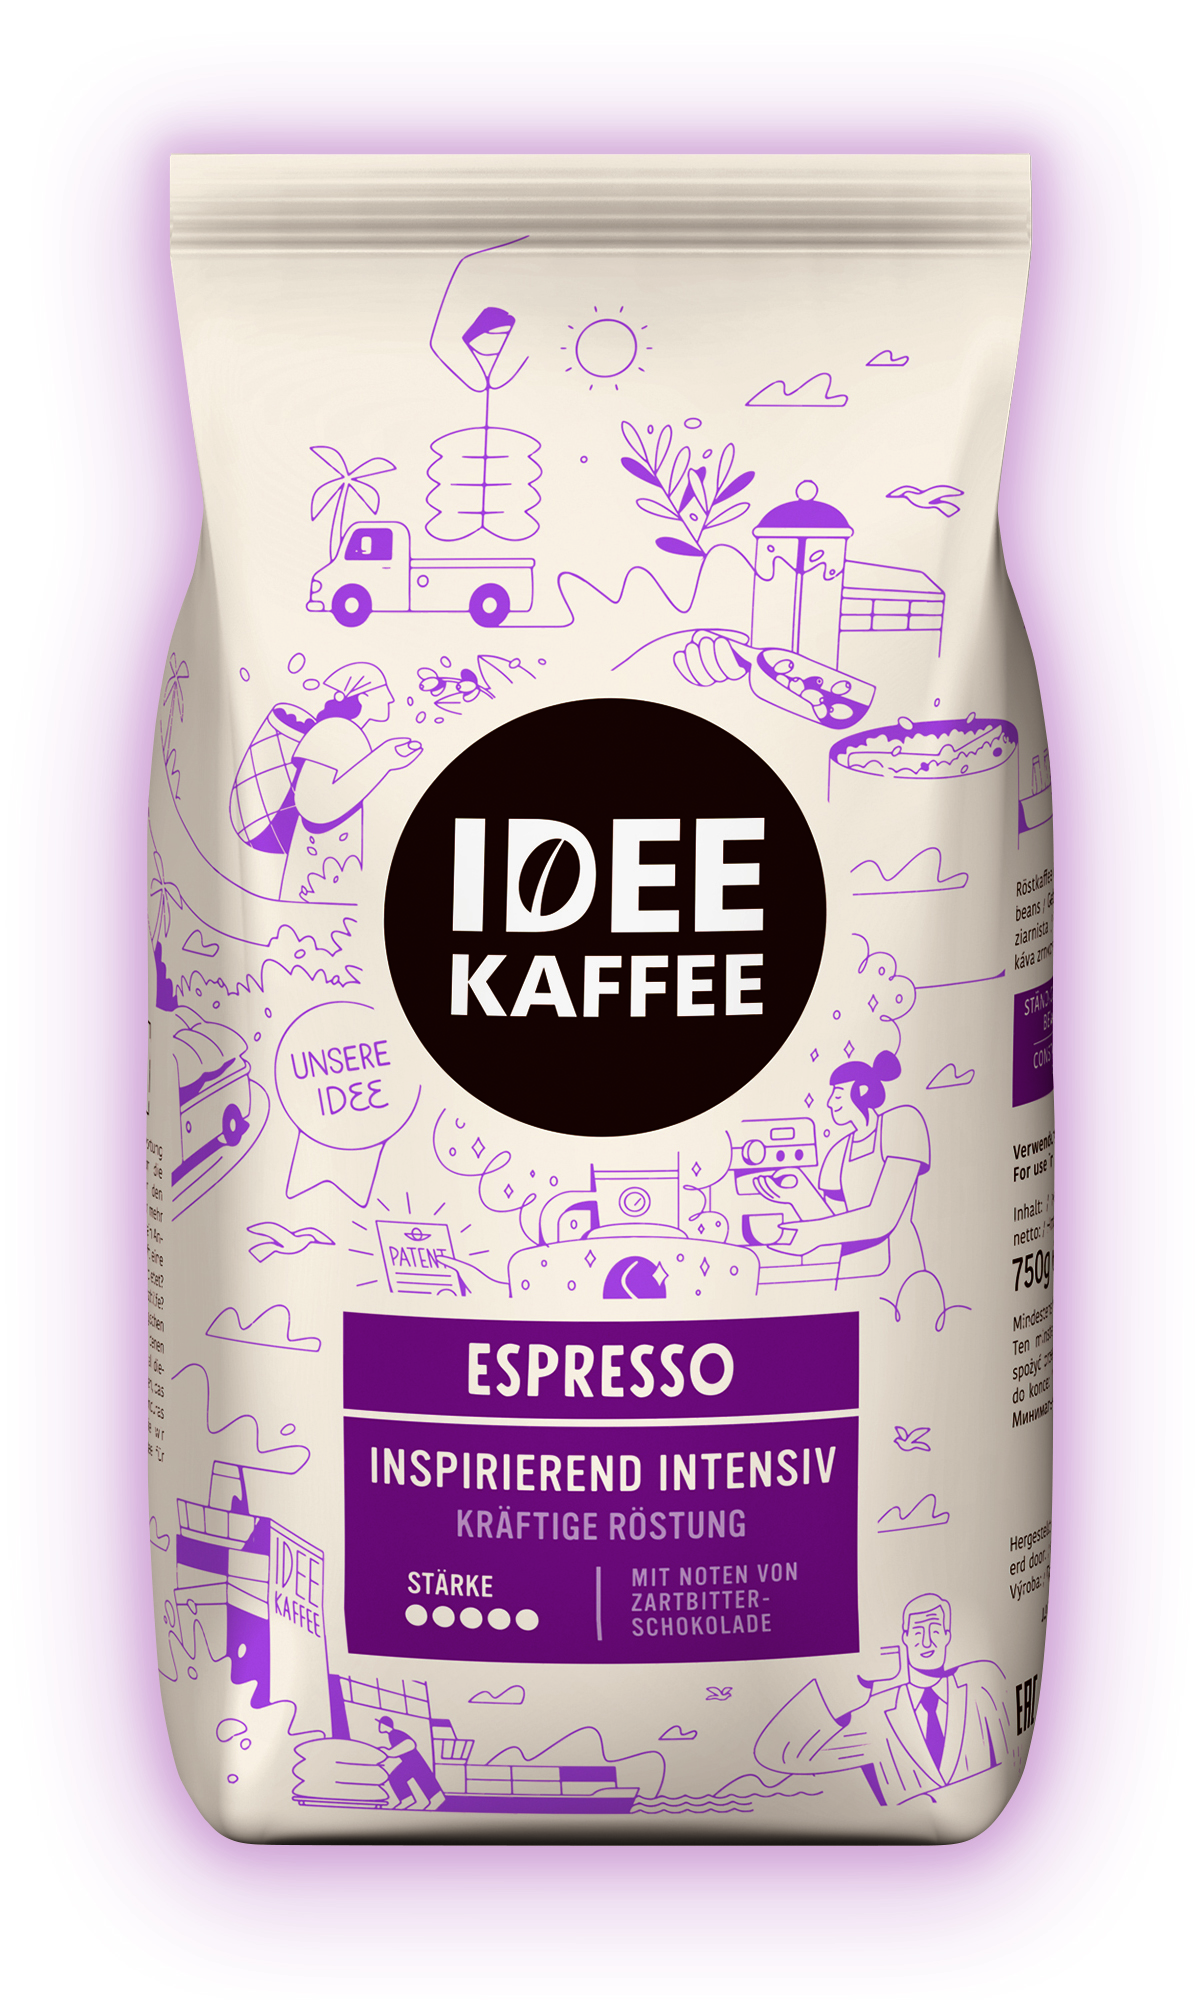 IDEE KAFFEE Espresso Inspirierend Intensiv